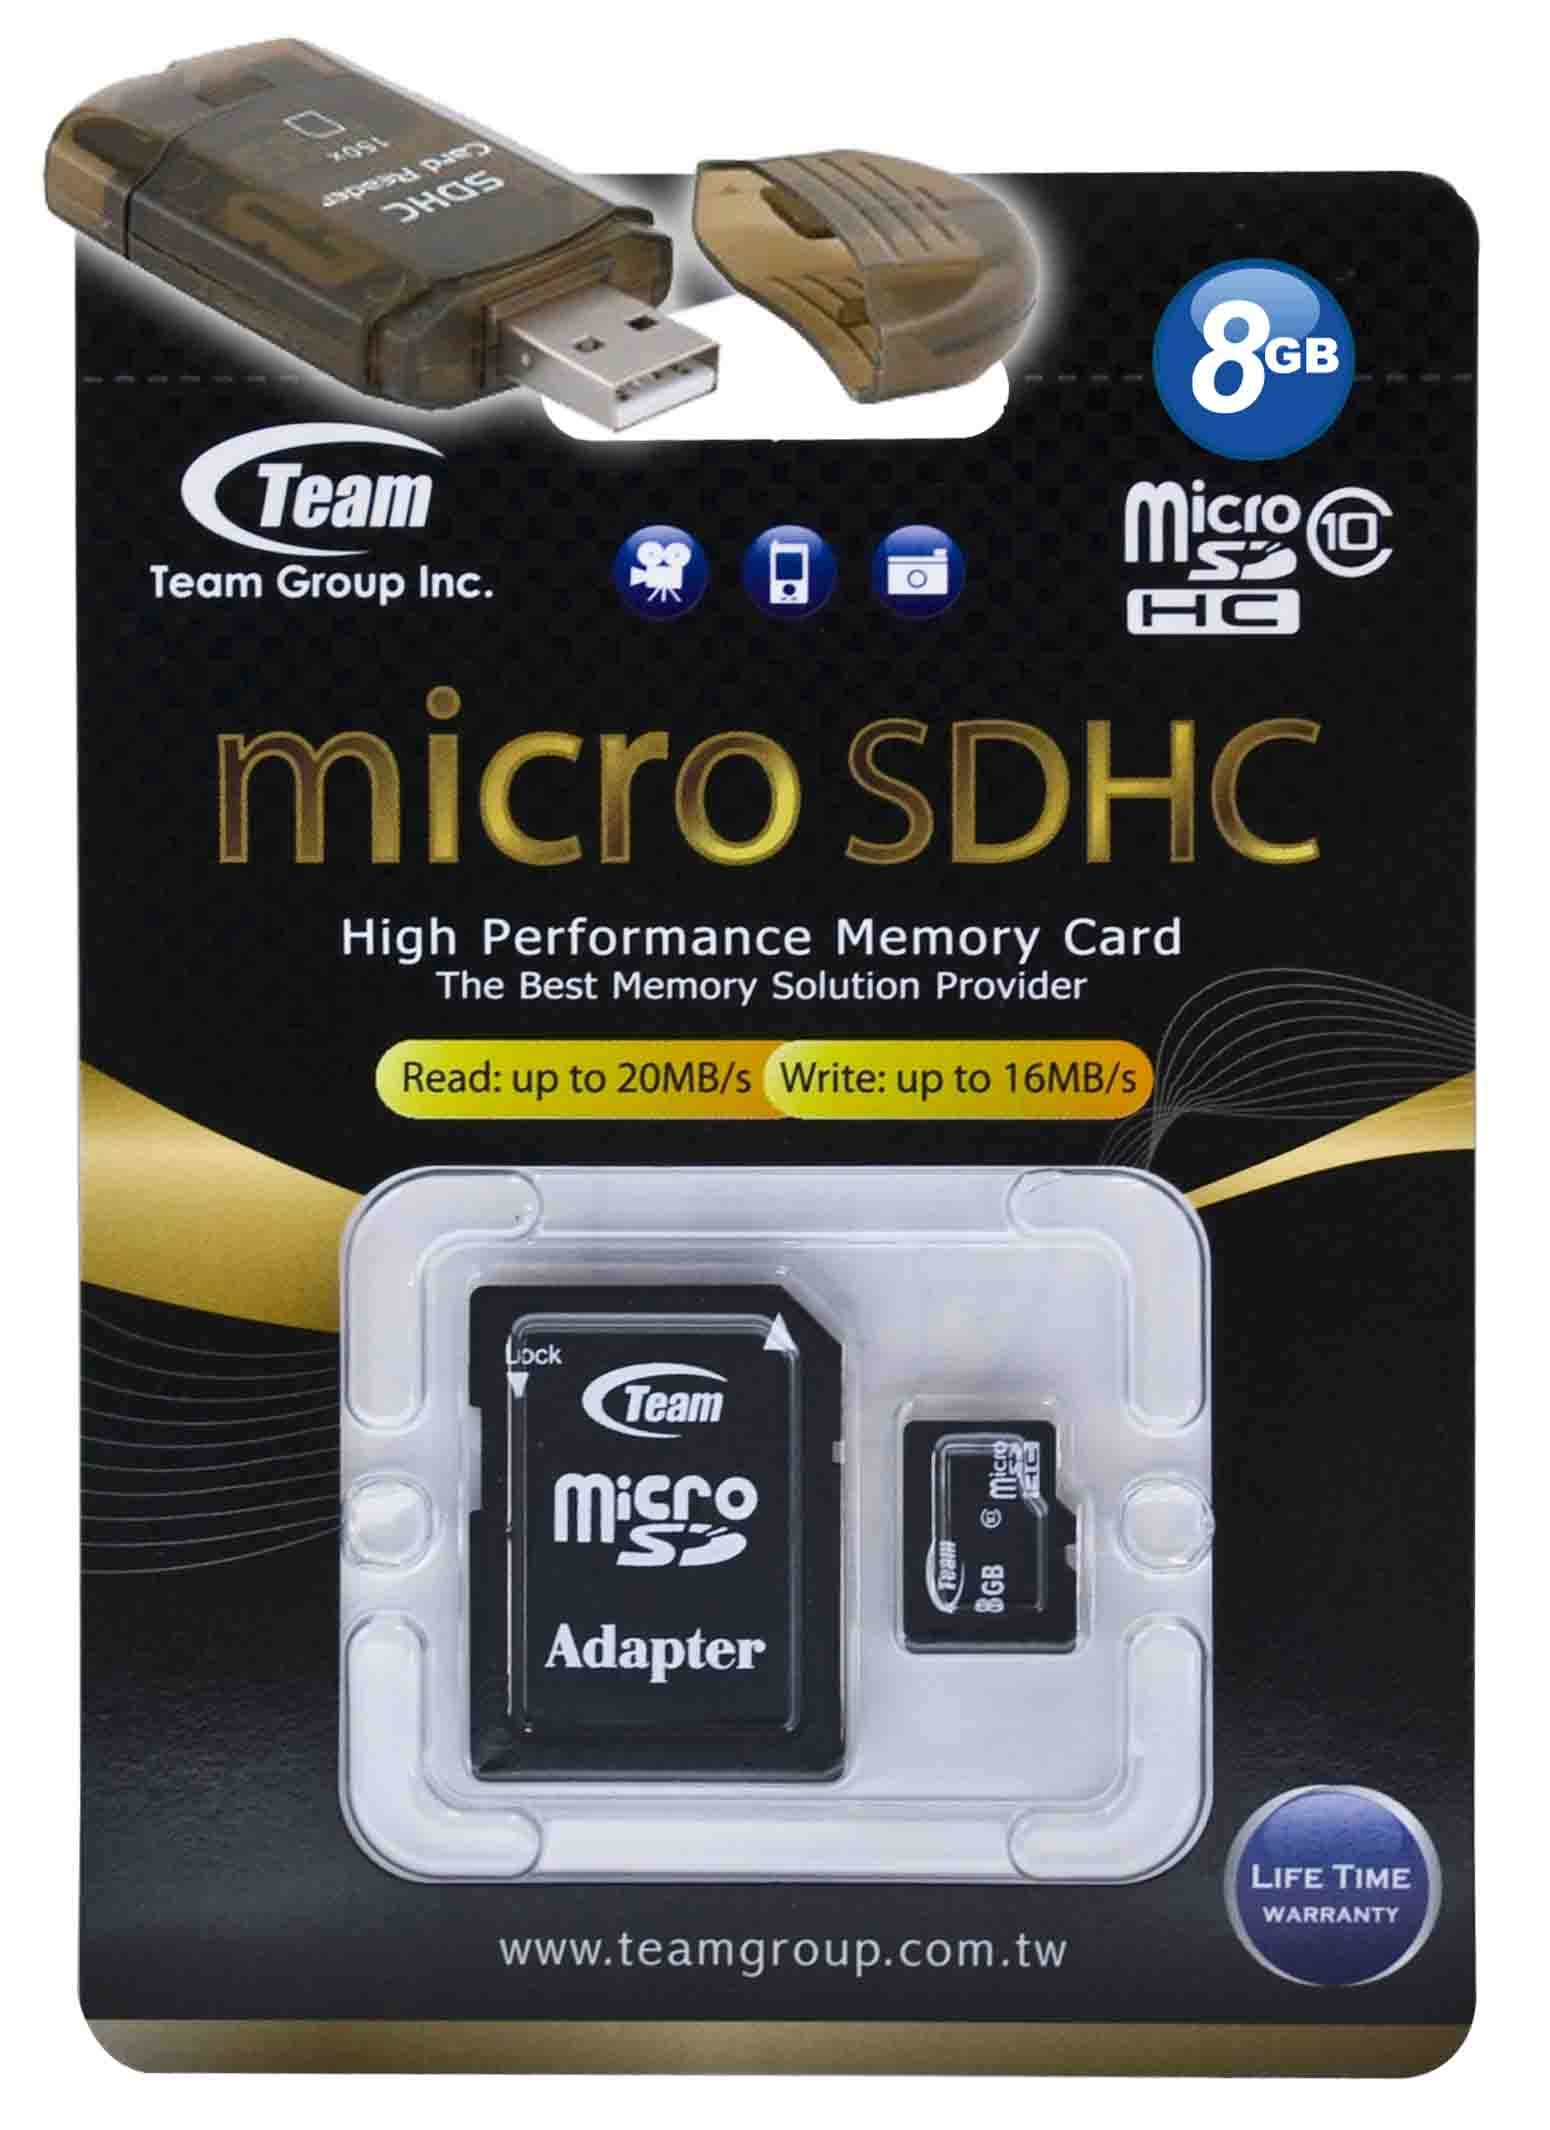 8GB Class 10 MicroSDHC Team High Speed 20MBSec Memory Card. Blazing Fast Card For LG Chocolate 2 VX8550 3 VX8560 Touch VX857